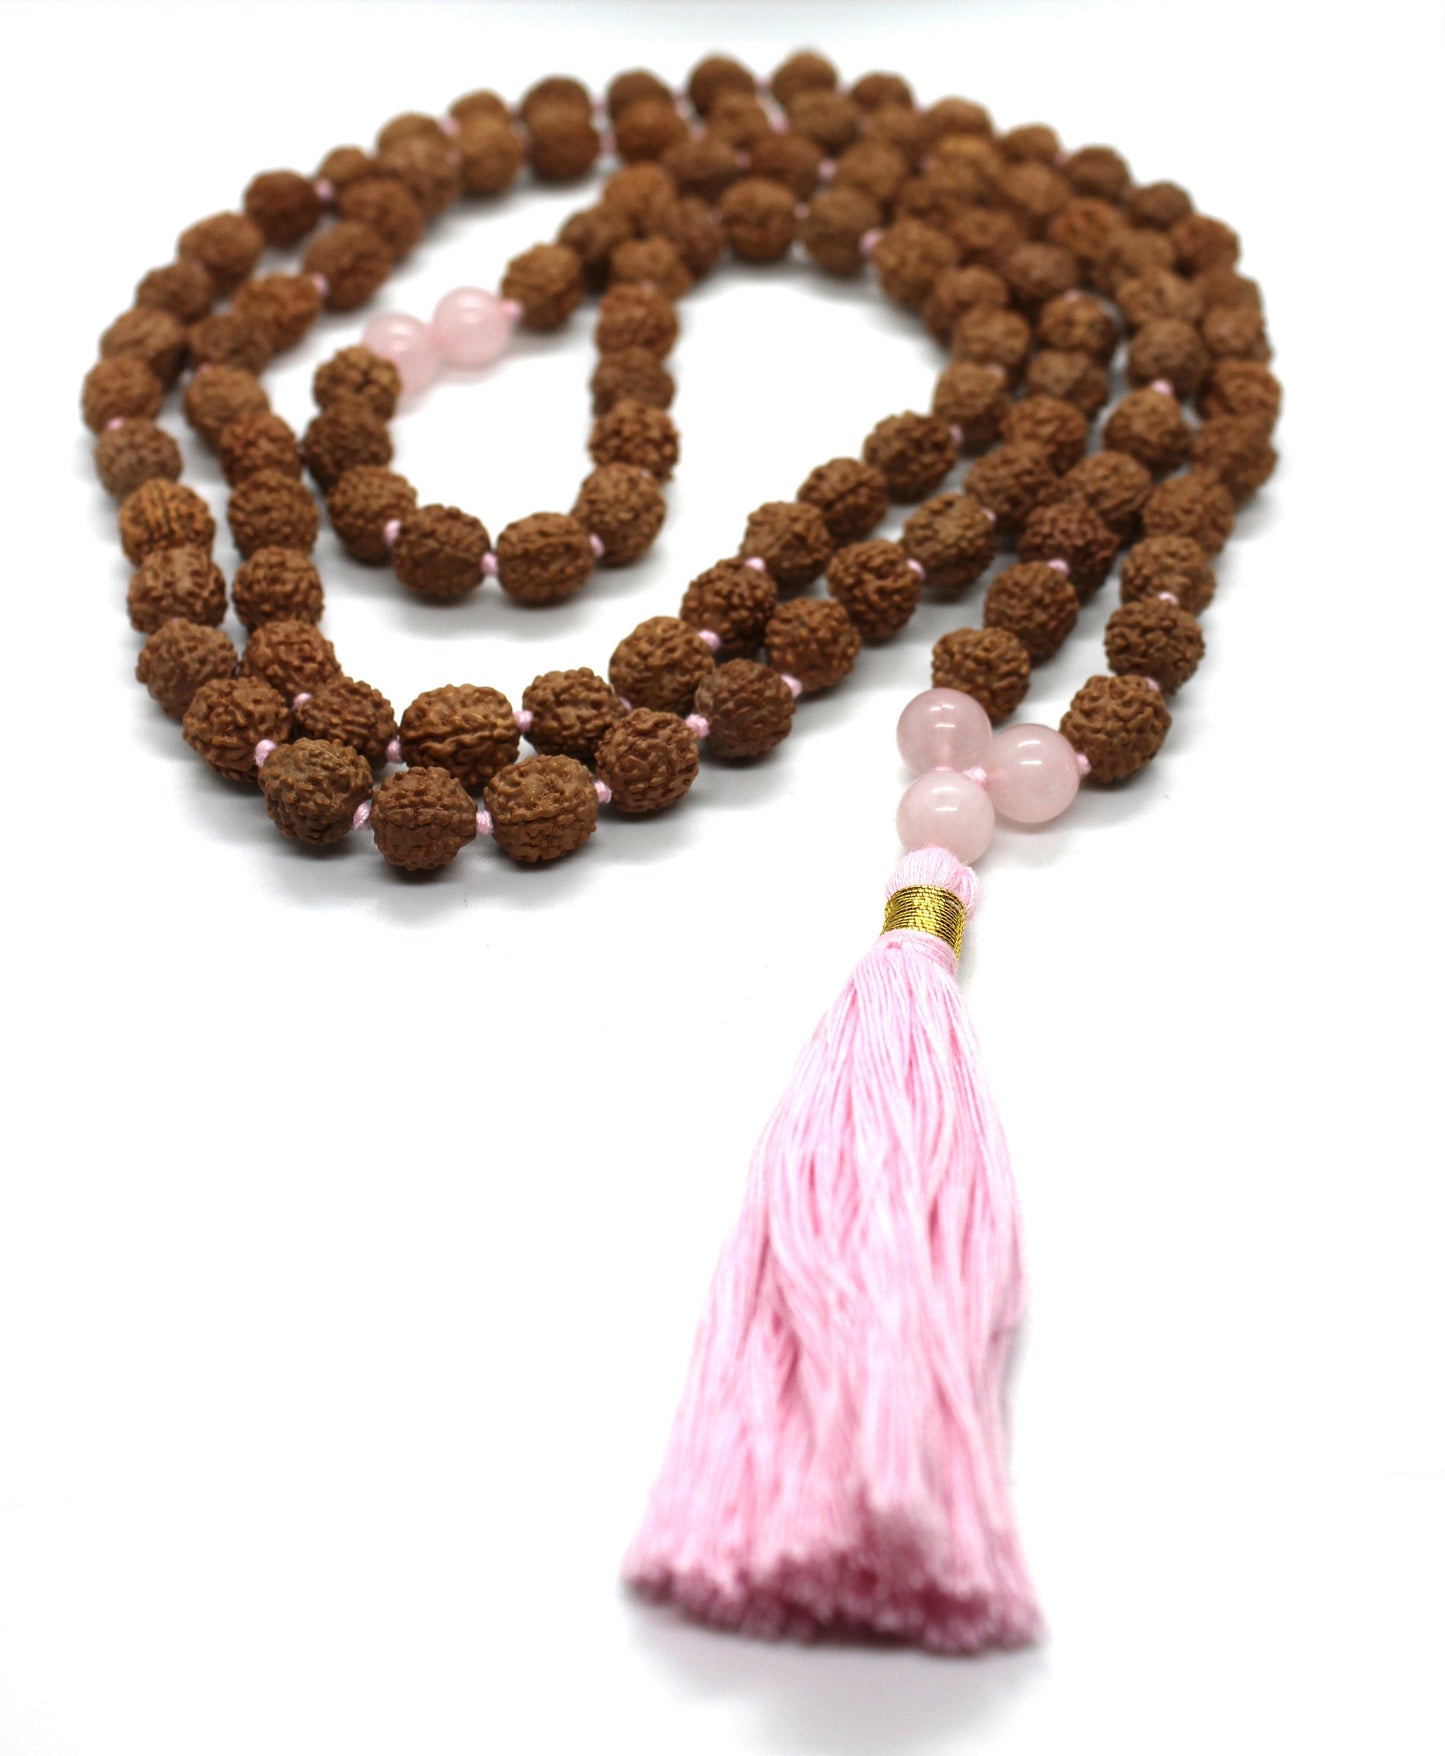 Rudraksha - Rose Quartz Mala Necklace, 108 Prayer Beads Mala Knotted Rudraksha Mala Beads, Rose Quartz Necklace, Japa Mala, Gemstone Mala